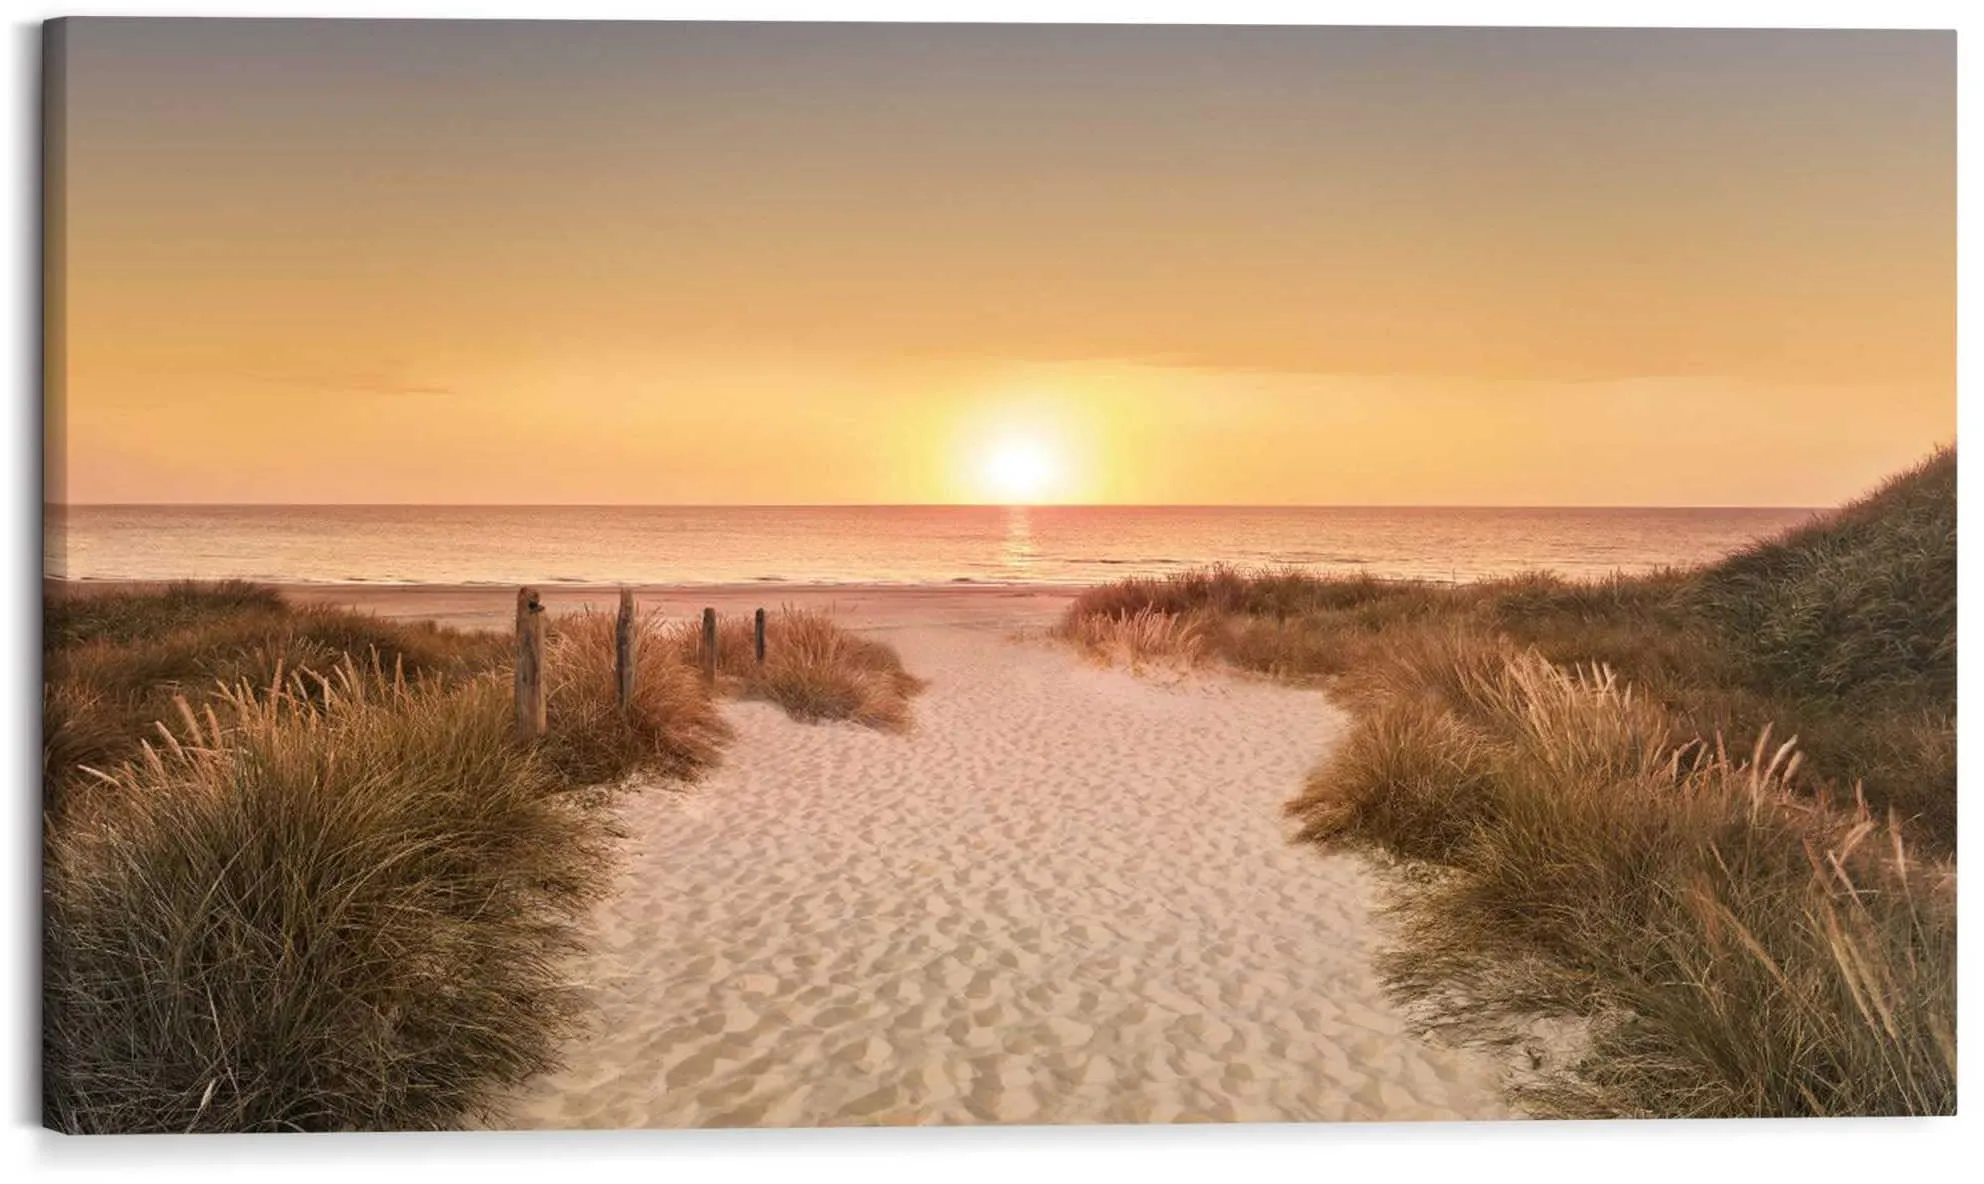 Kunstdruck REINDERS "Sonnenuntergang" Bilder Gr. B/H/T: 118 cm x 70 cm x 2 cm, orange Kunstdrucke